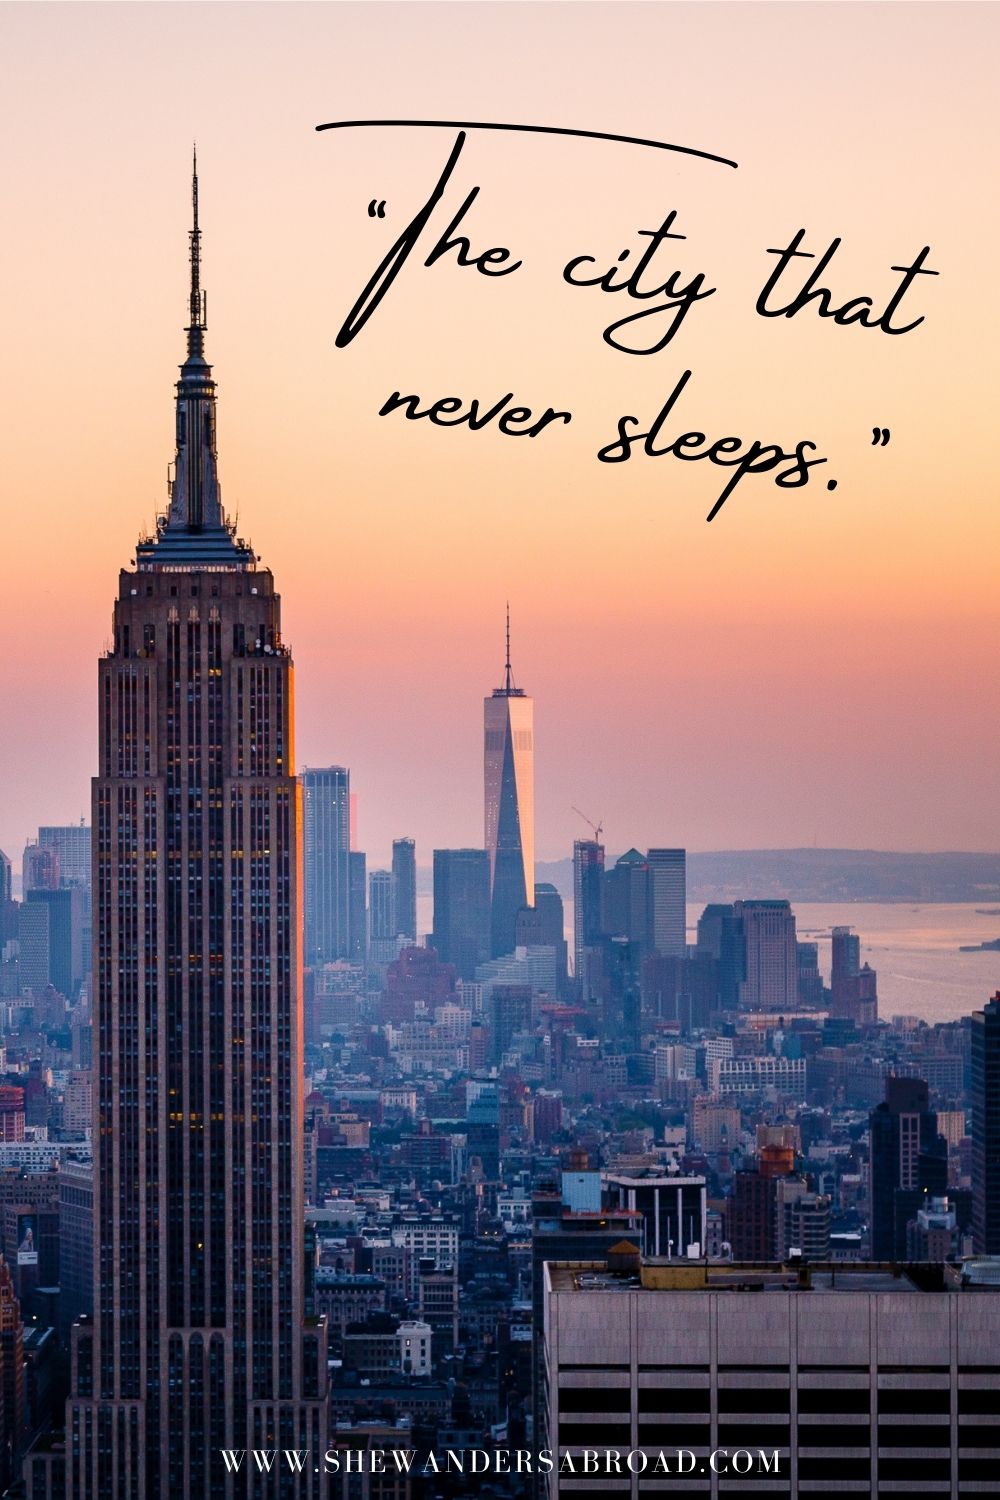 Best New York captions for Instagram